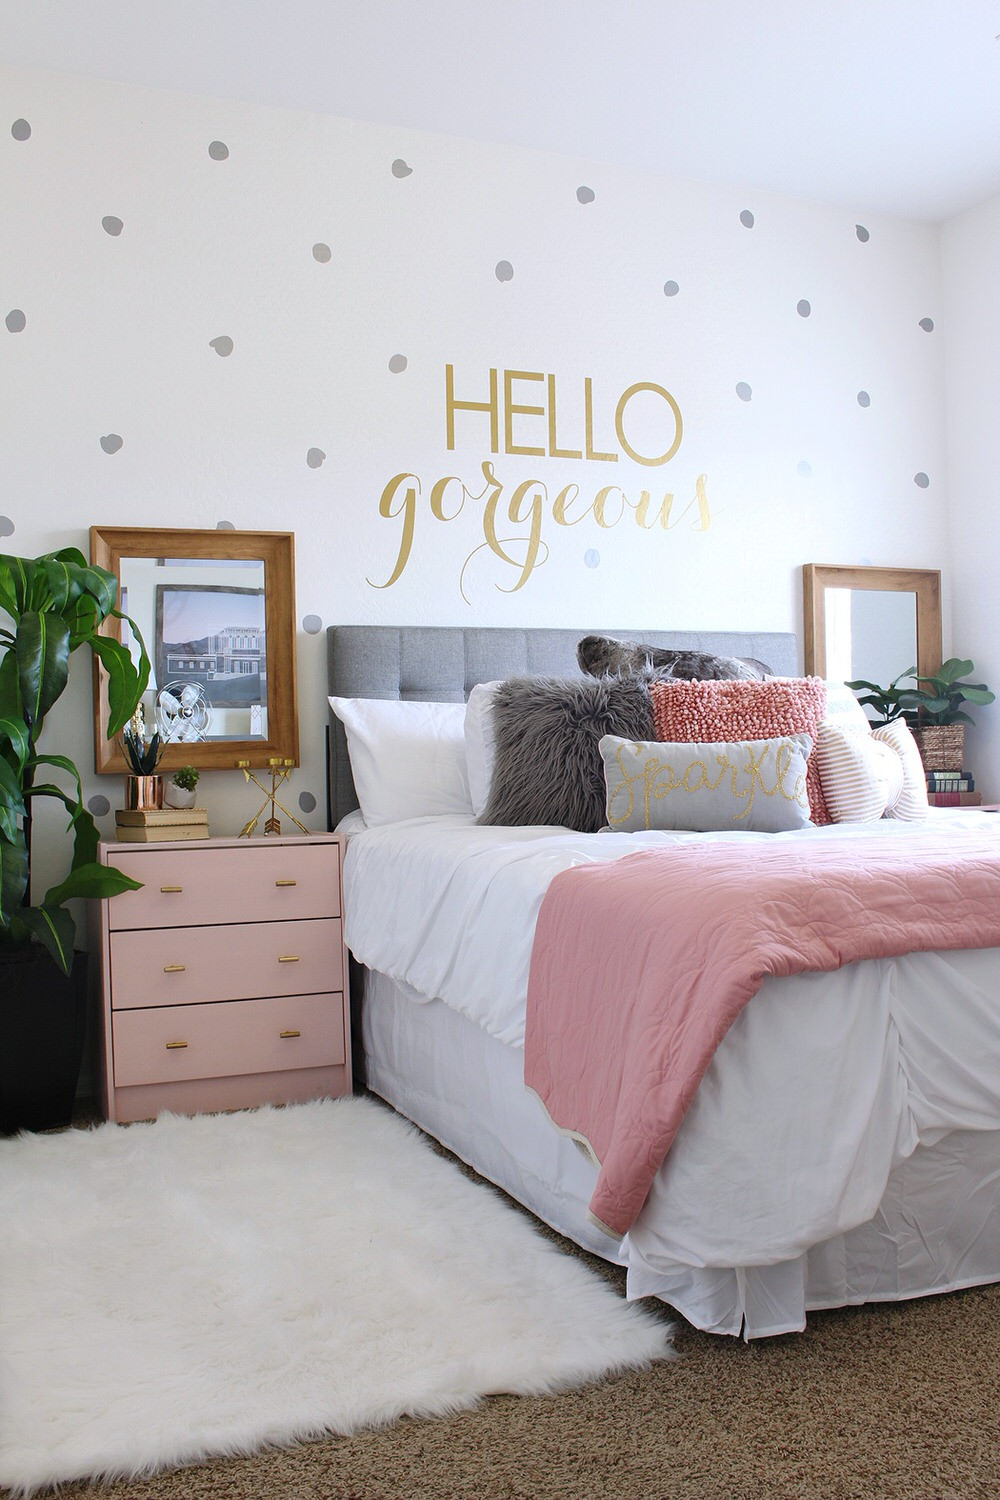 Pinterest Girls Bedroom
 Teen Bedroom Decorating Tips Tricks & Projects • The